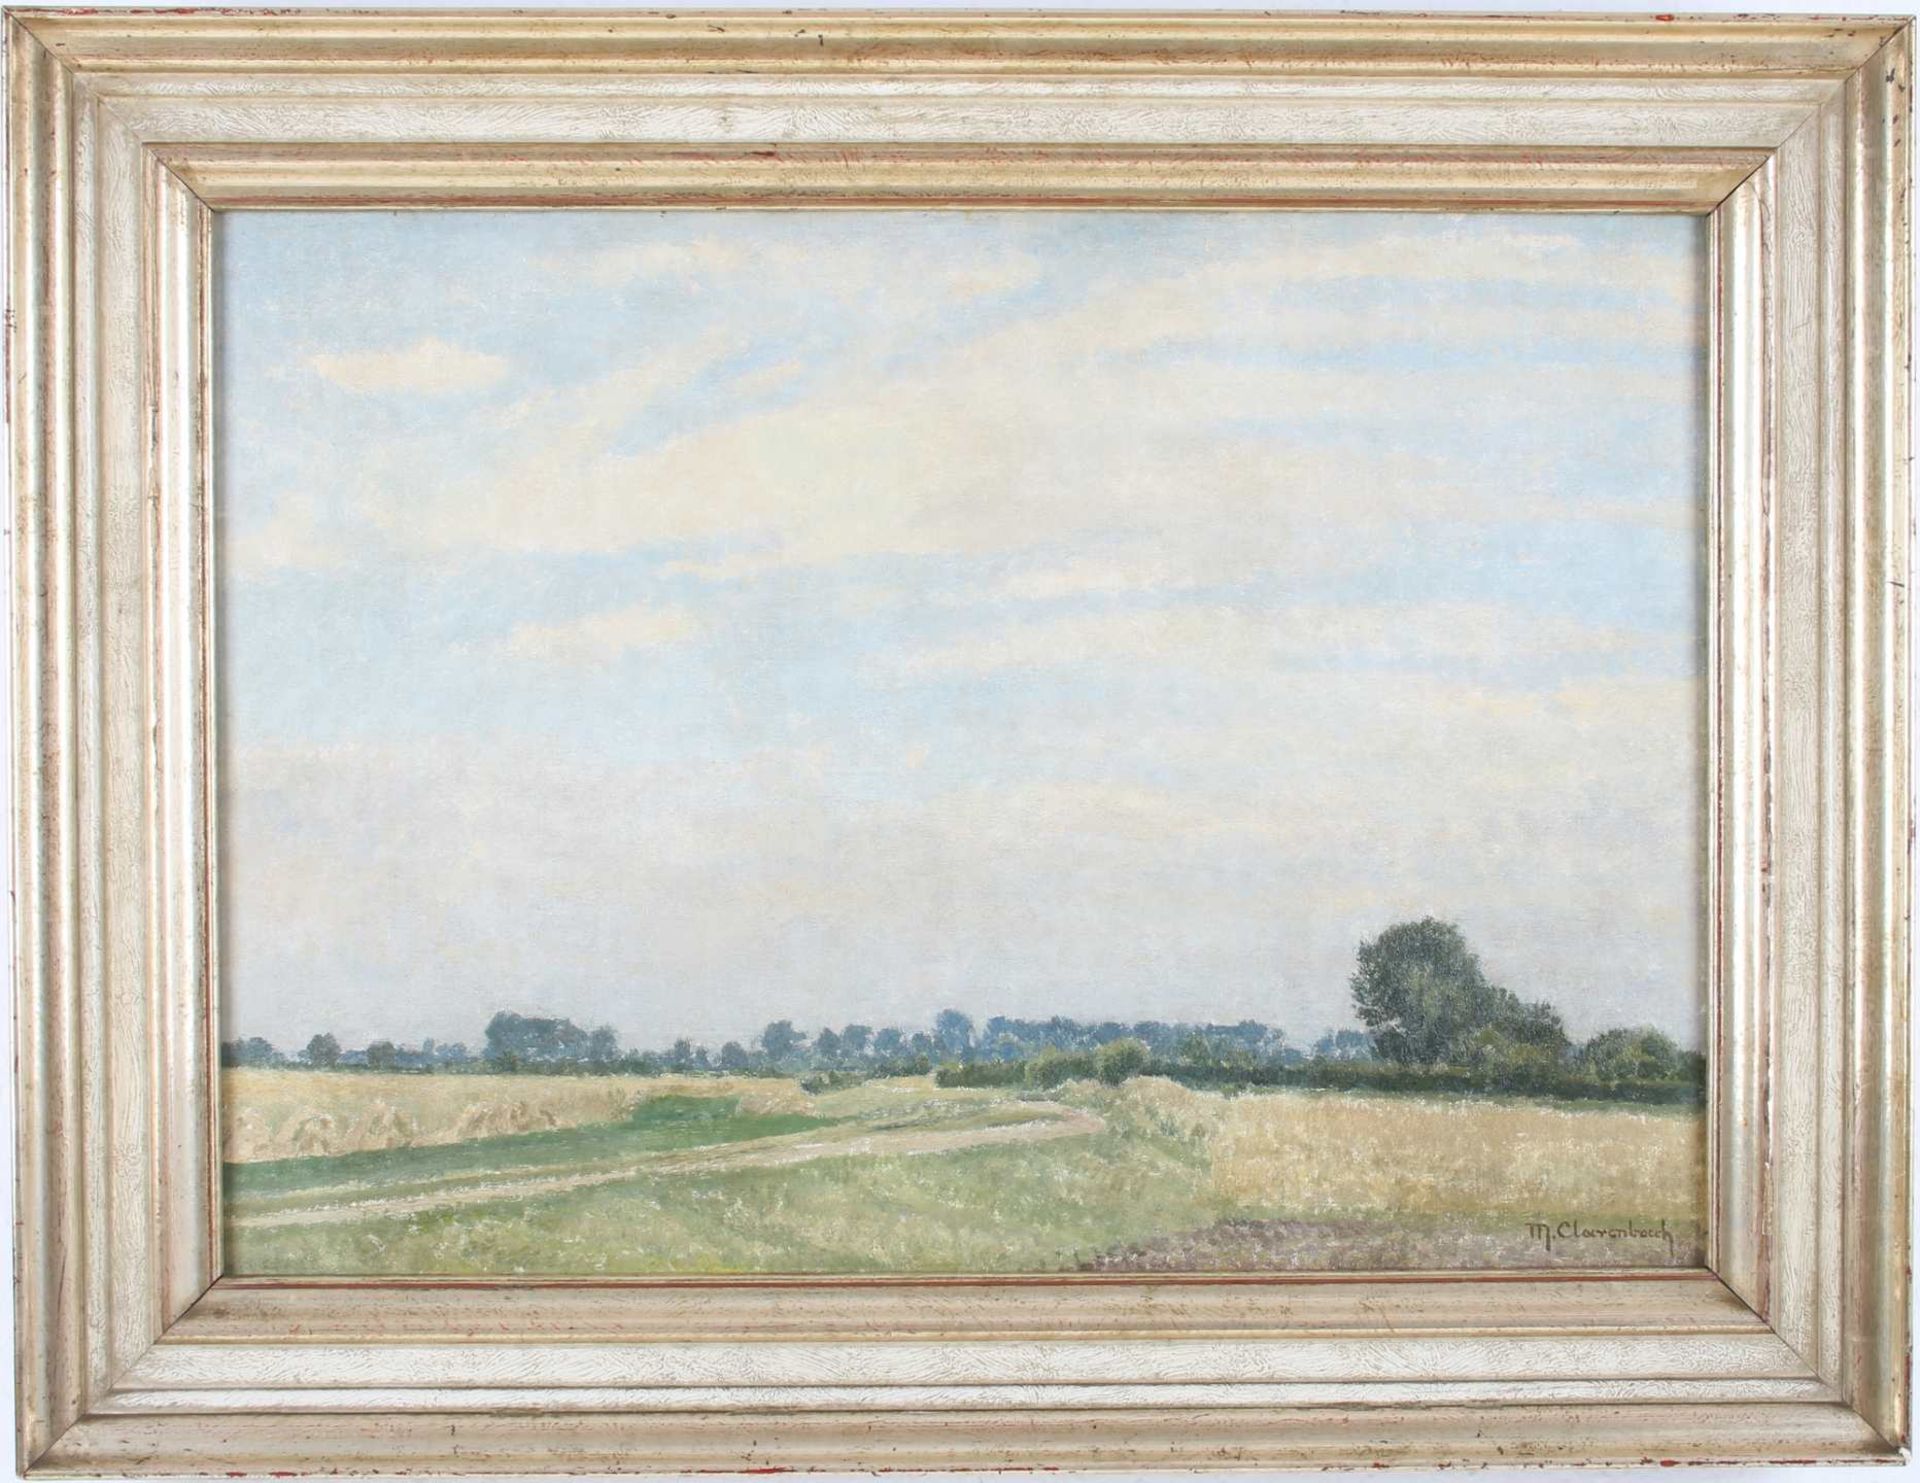 Max Clarenbach (1880-1952) Landschaft mit Blick in die Ferne, landscape gaze into the distance, - Image 2 of 4